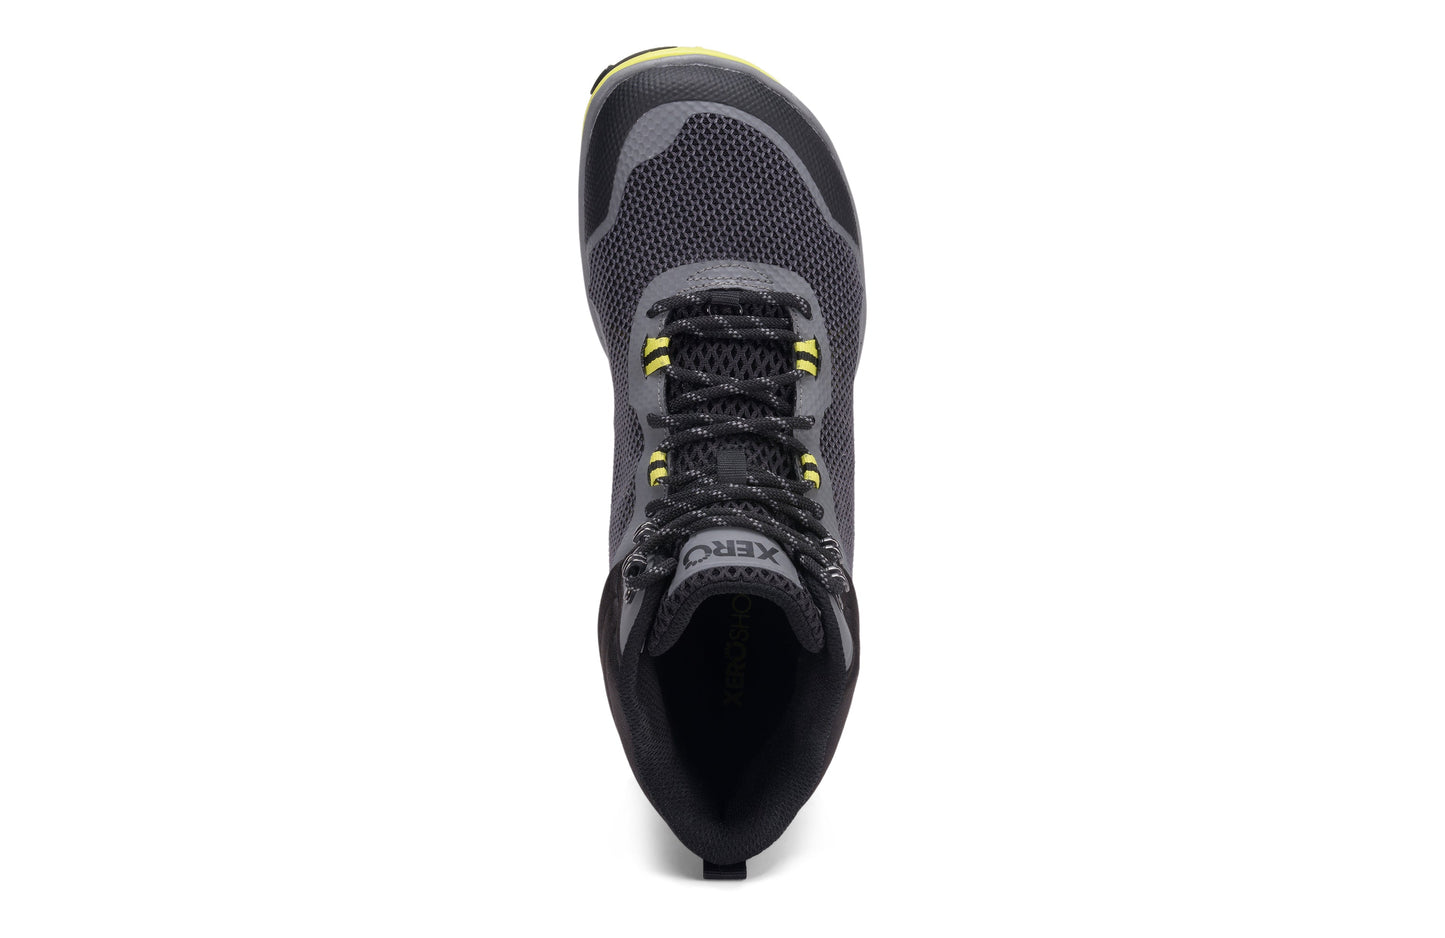 Xero Shoes Scrambler Mid Mens barfods lette vandrestøvler til mænd i farven steel gray / sulphur, top